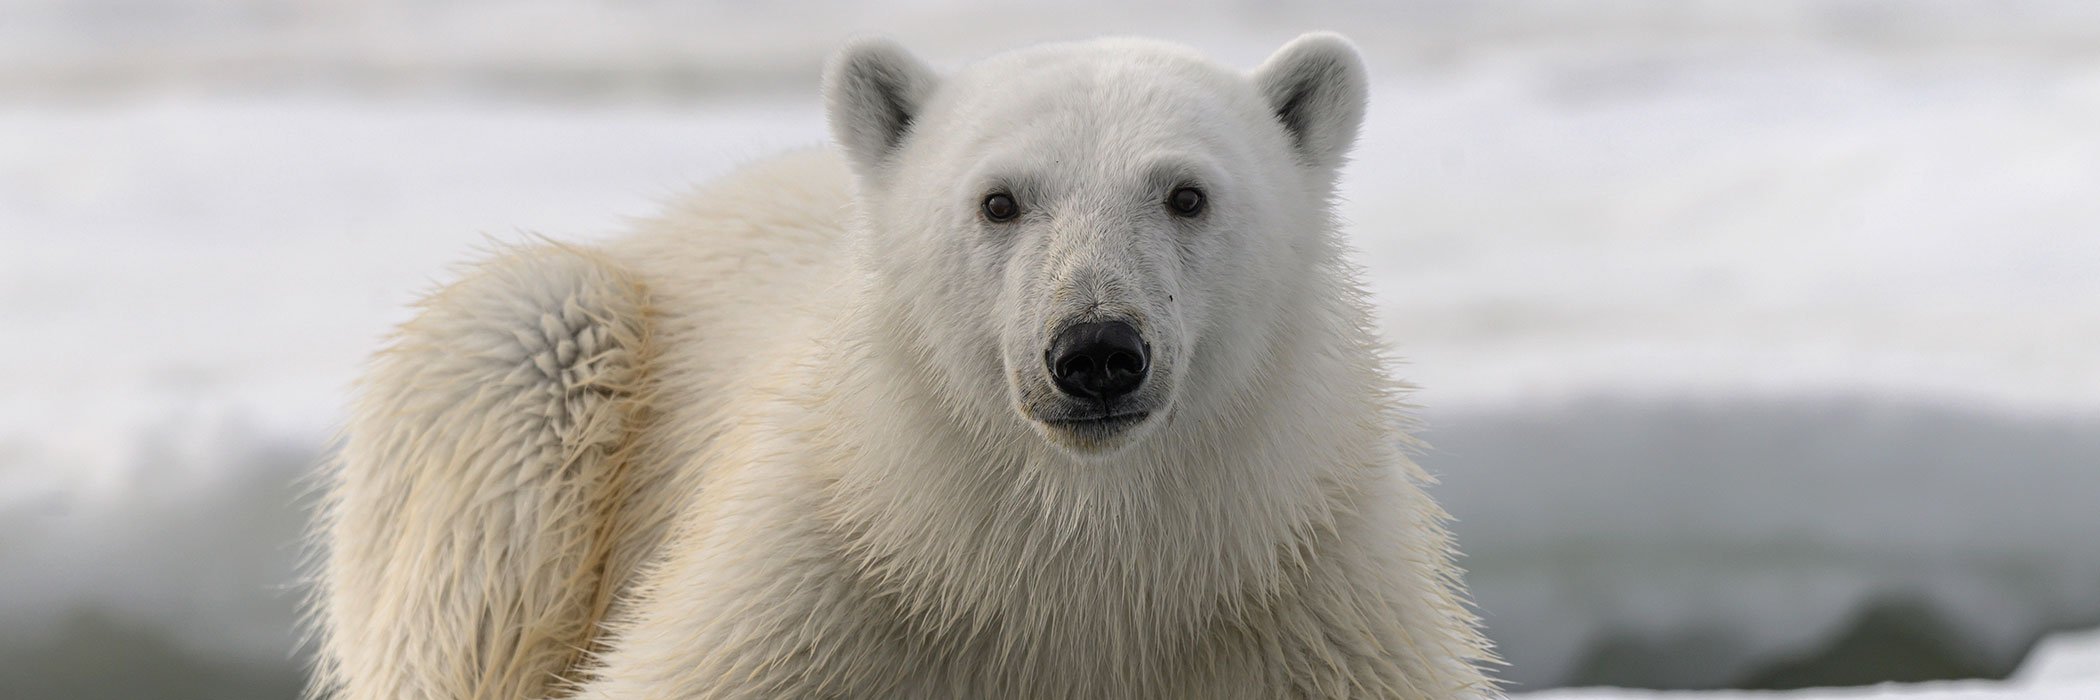  Polar bear portrait